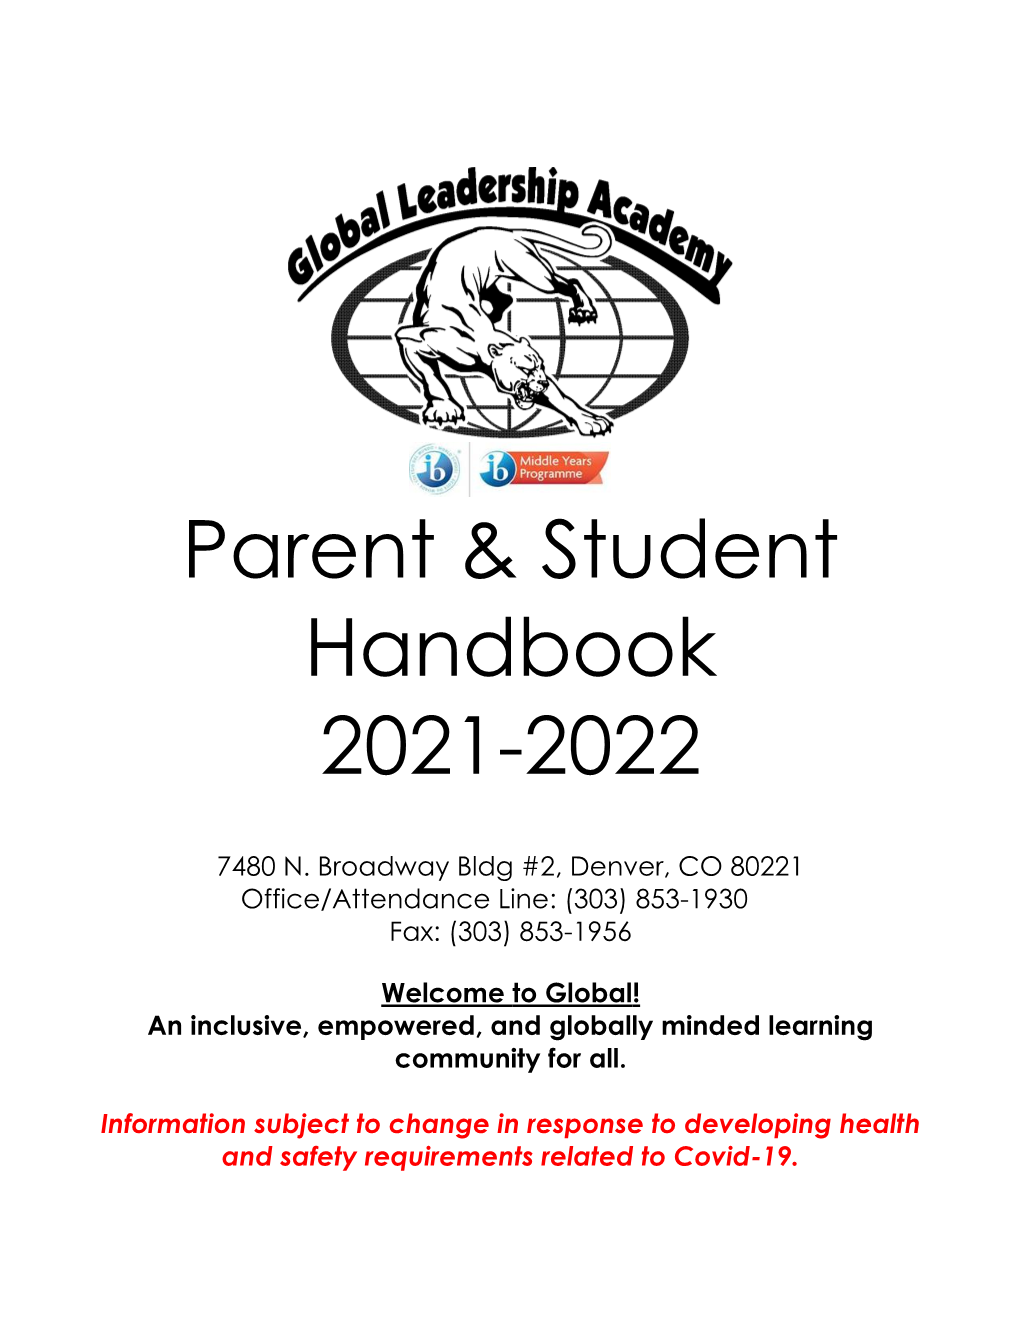 Parent & Student Handbook 2021-2022